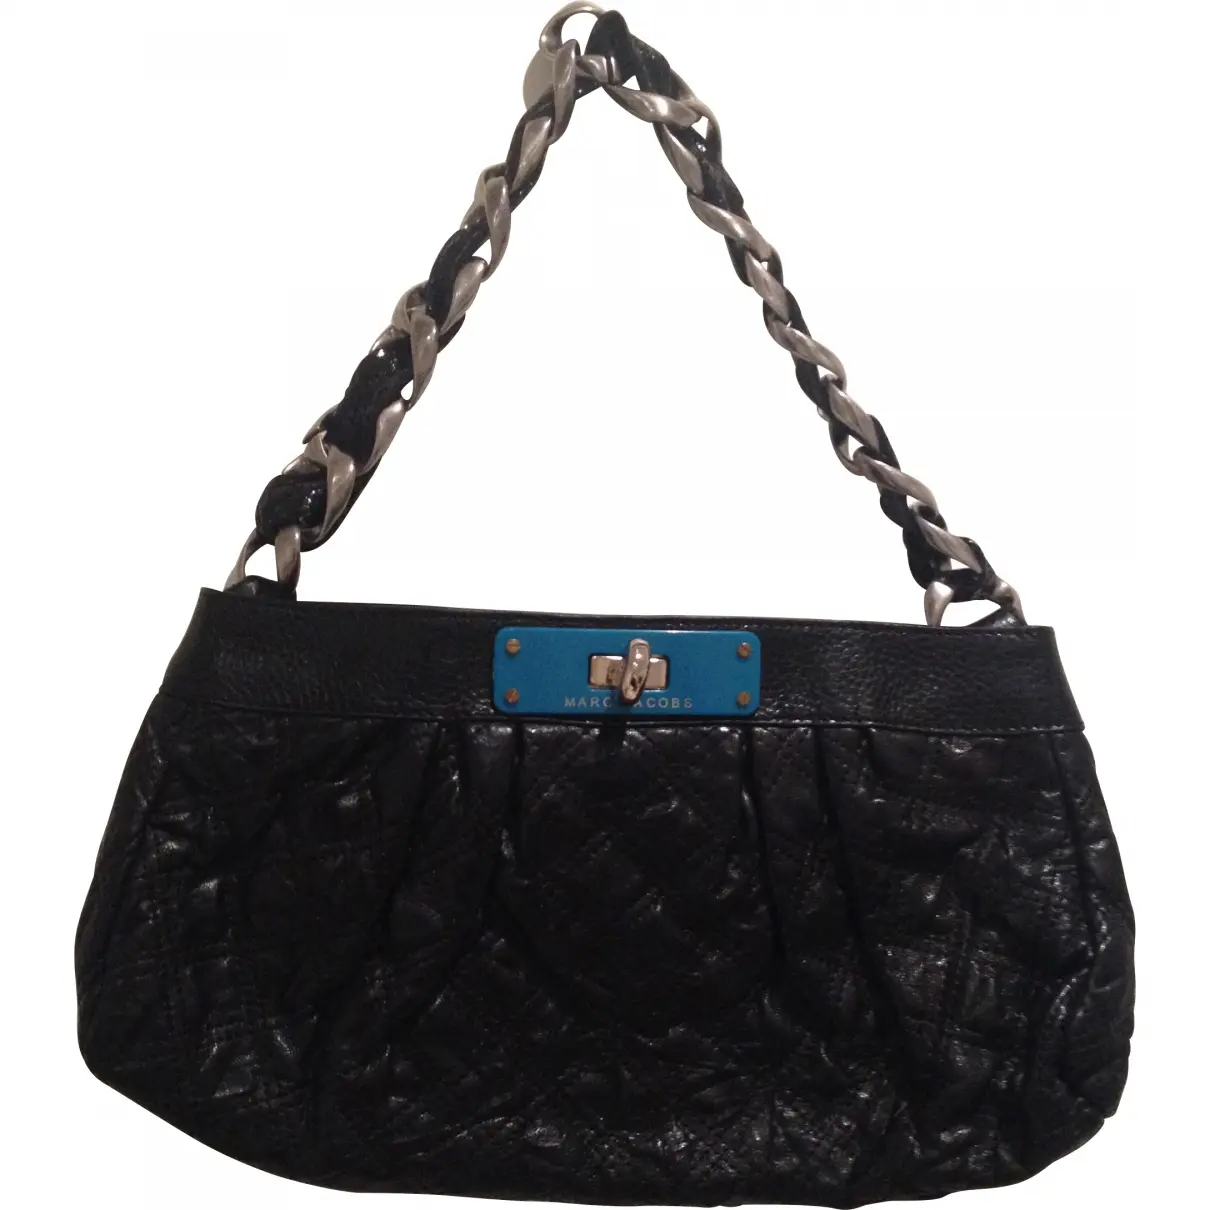 Black Leather Handbag Marc Jacobs